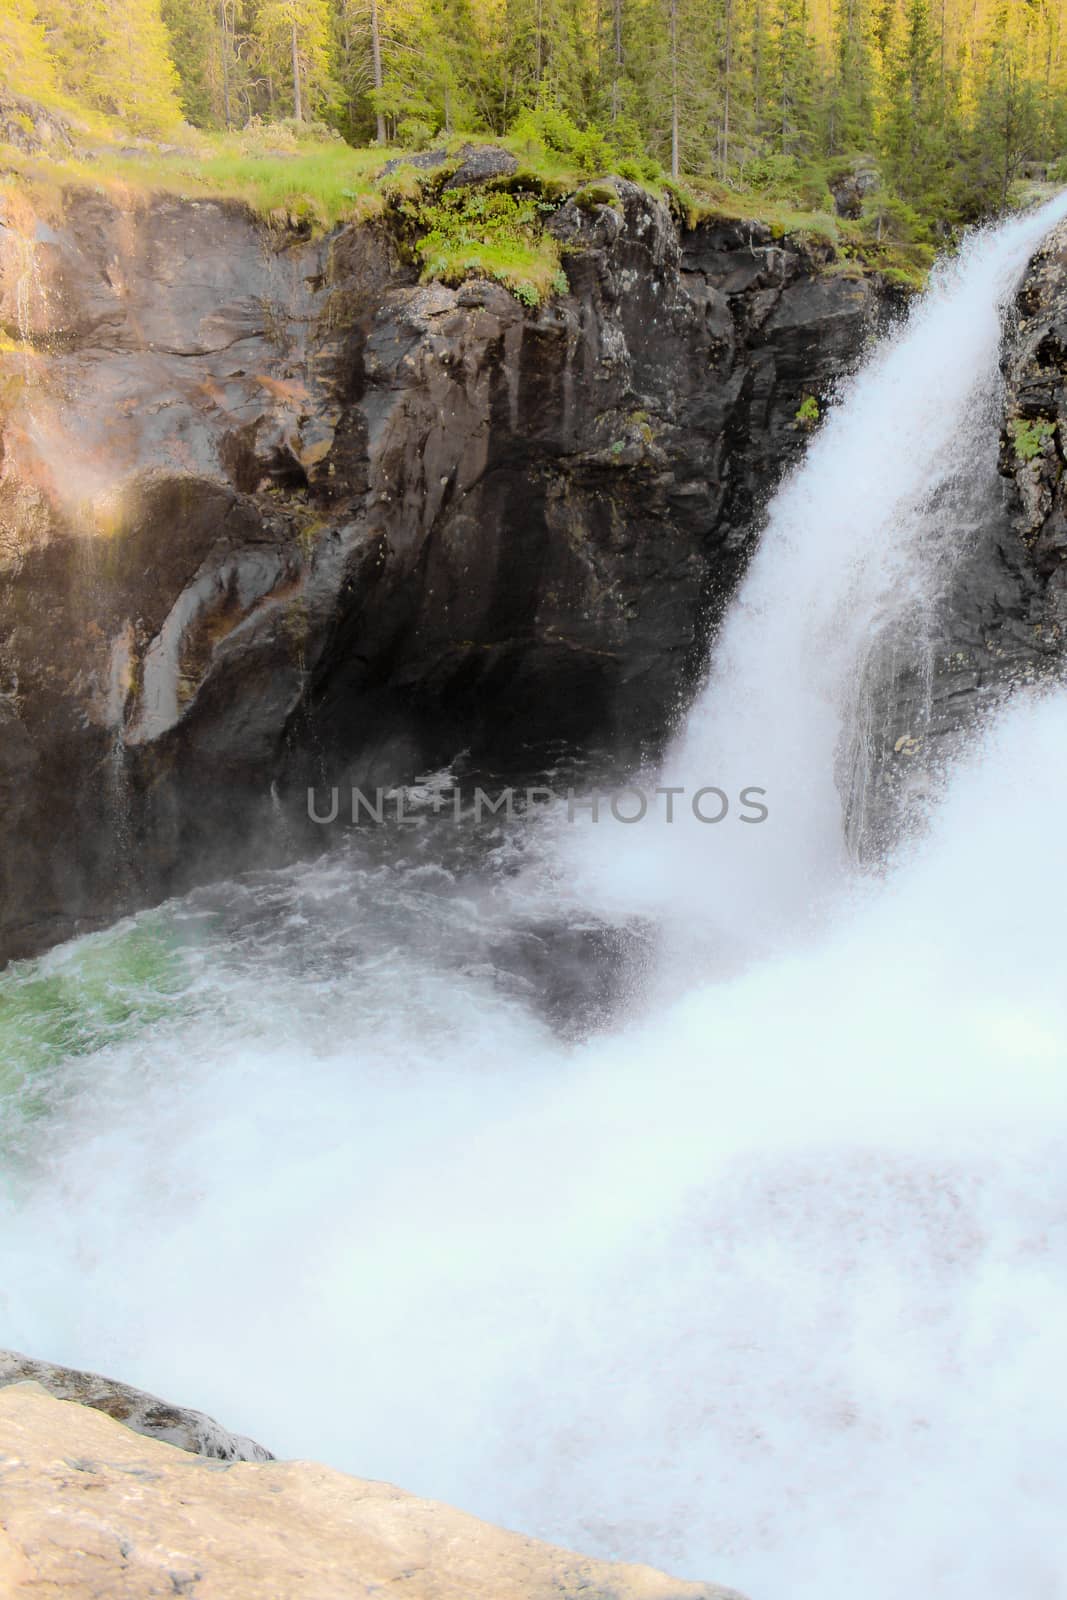 The most beautiful waterfall in Europe. Rjukandefossen in Hemsedal, Buskerud, Norway.